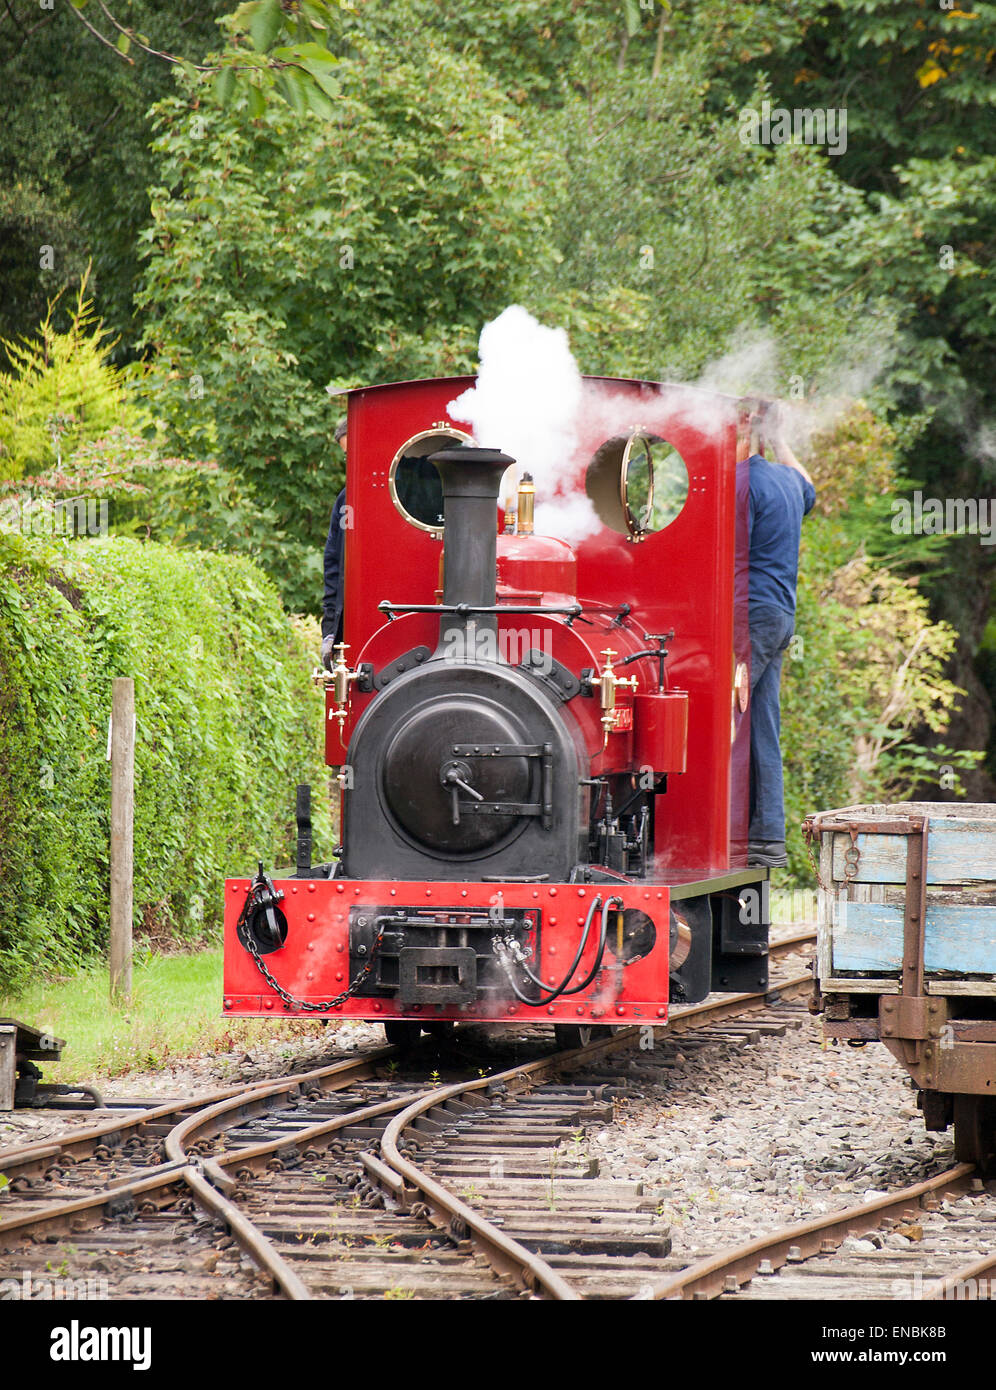 Narrow gauge steam locomotive, Lancashire Stock Photo - Alamy